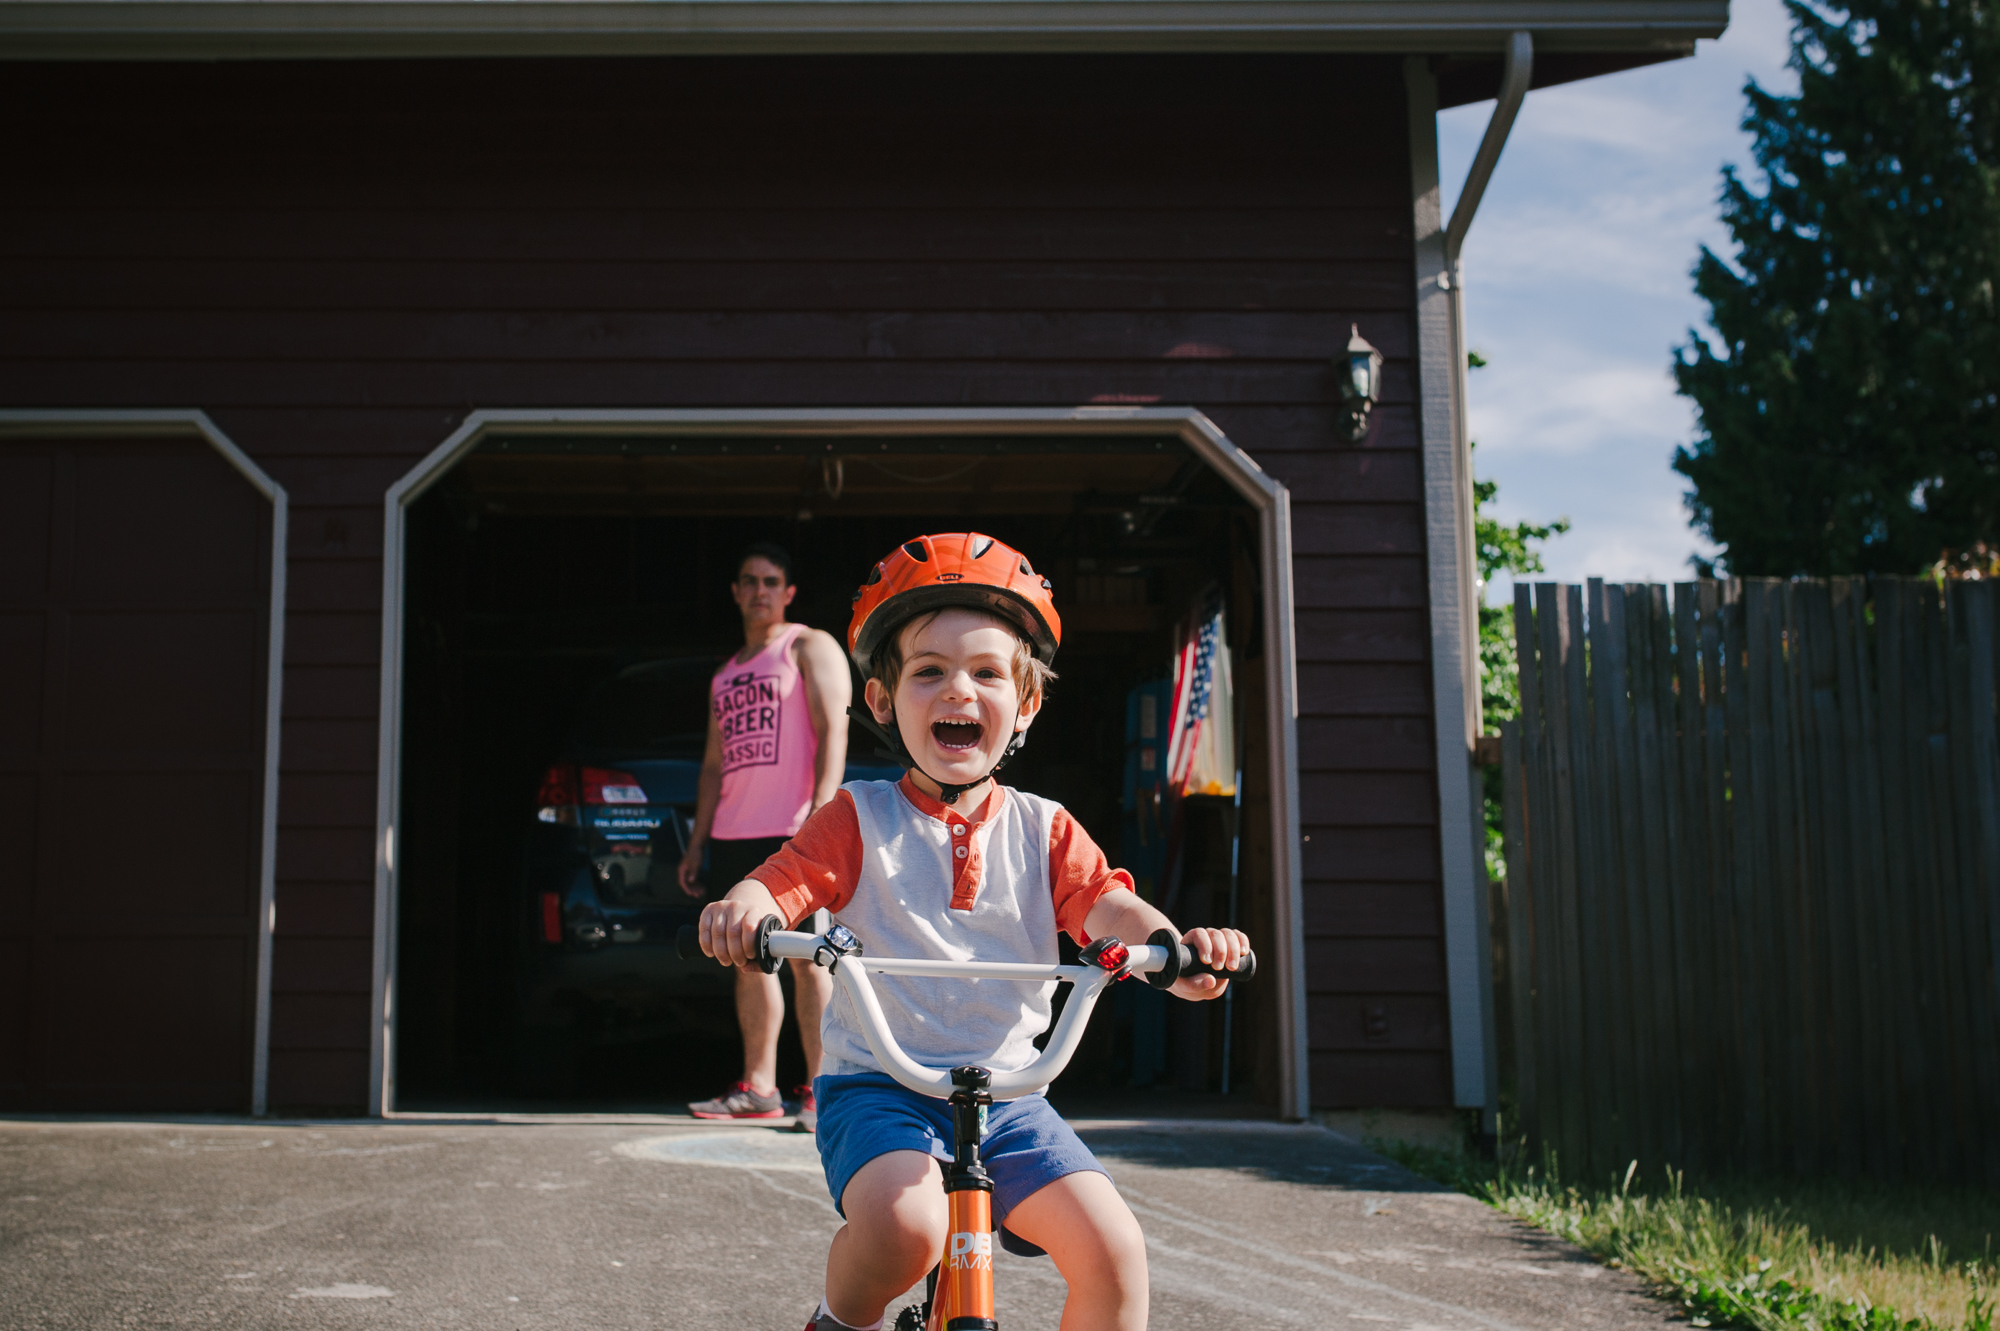 boy rides bike in driveway